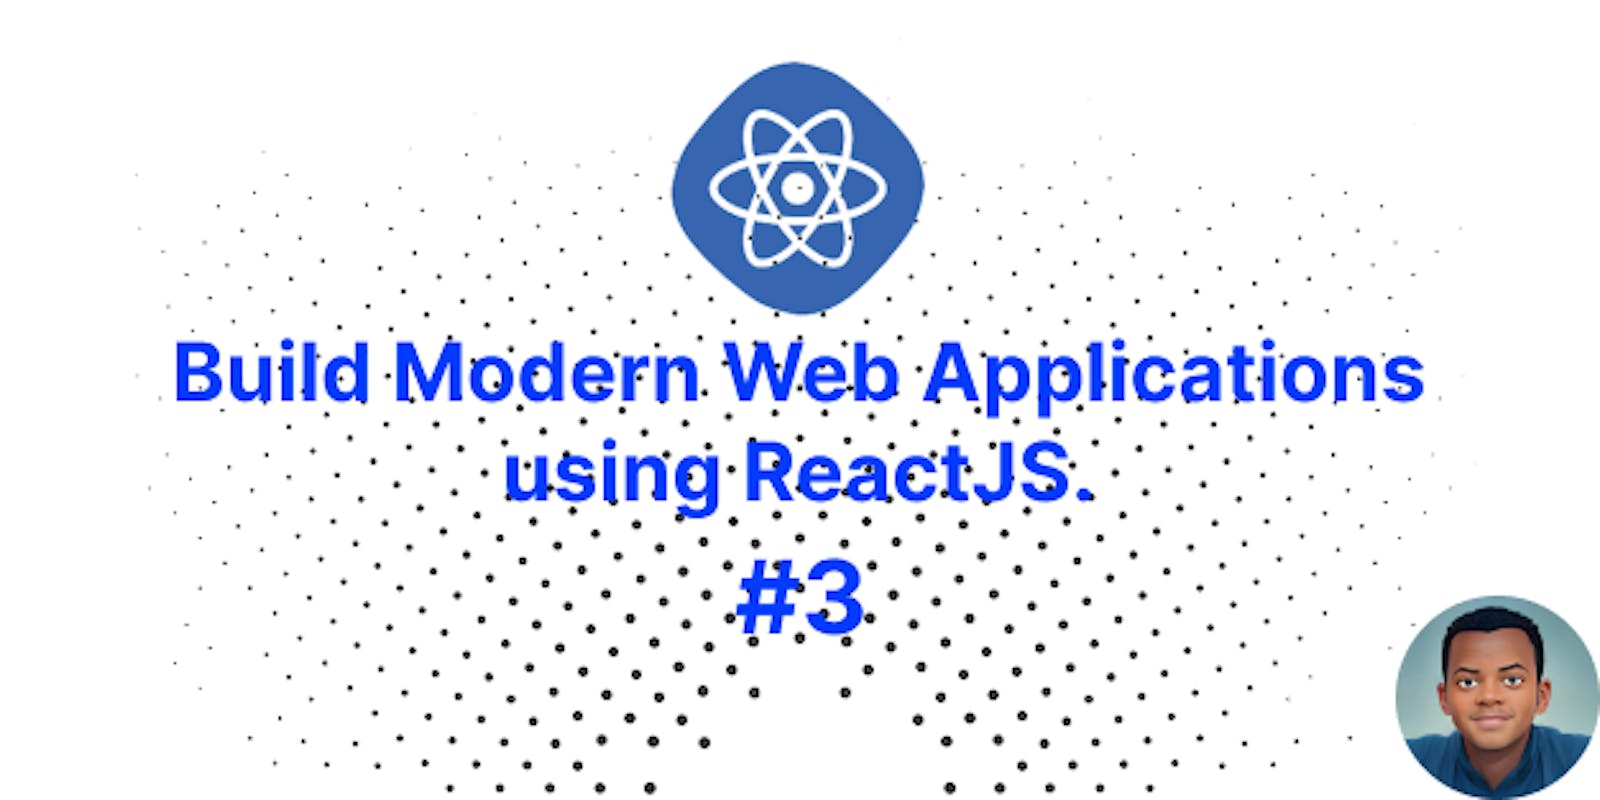 Build Modern Web Applications using ReactJS #3.